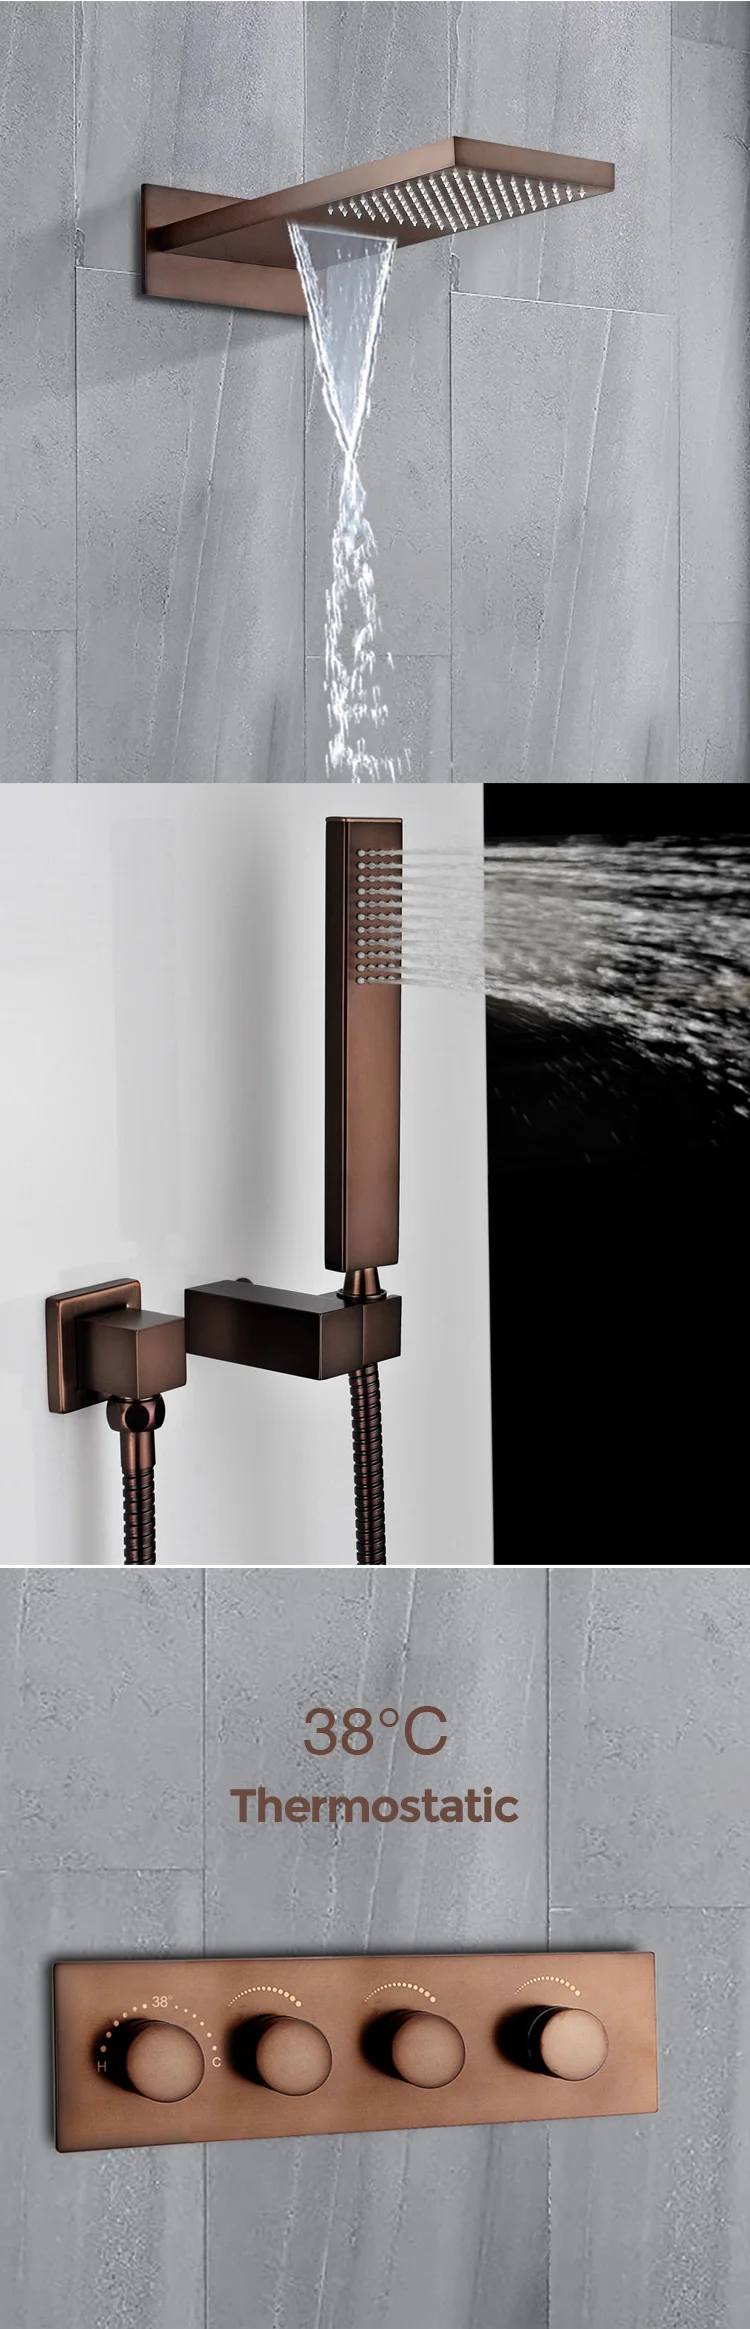 shower set in wall mounted Bathroom taps luxury brass kits rain rainfall showerset mixer faucet set antique chrome shower mixer